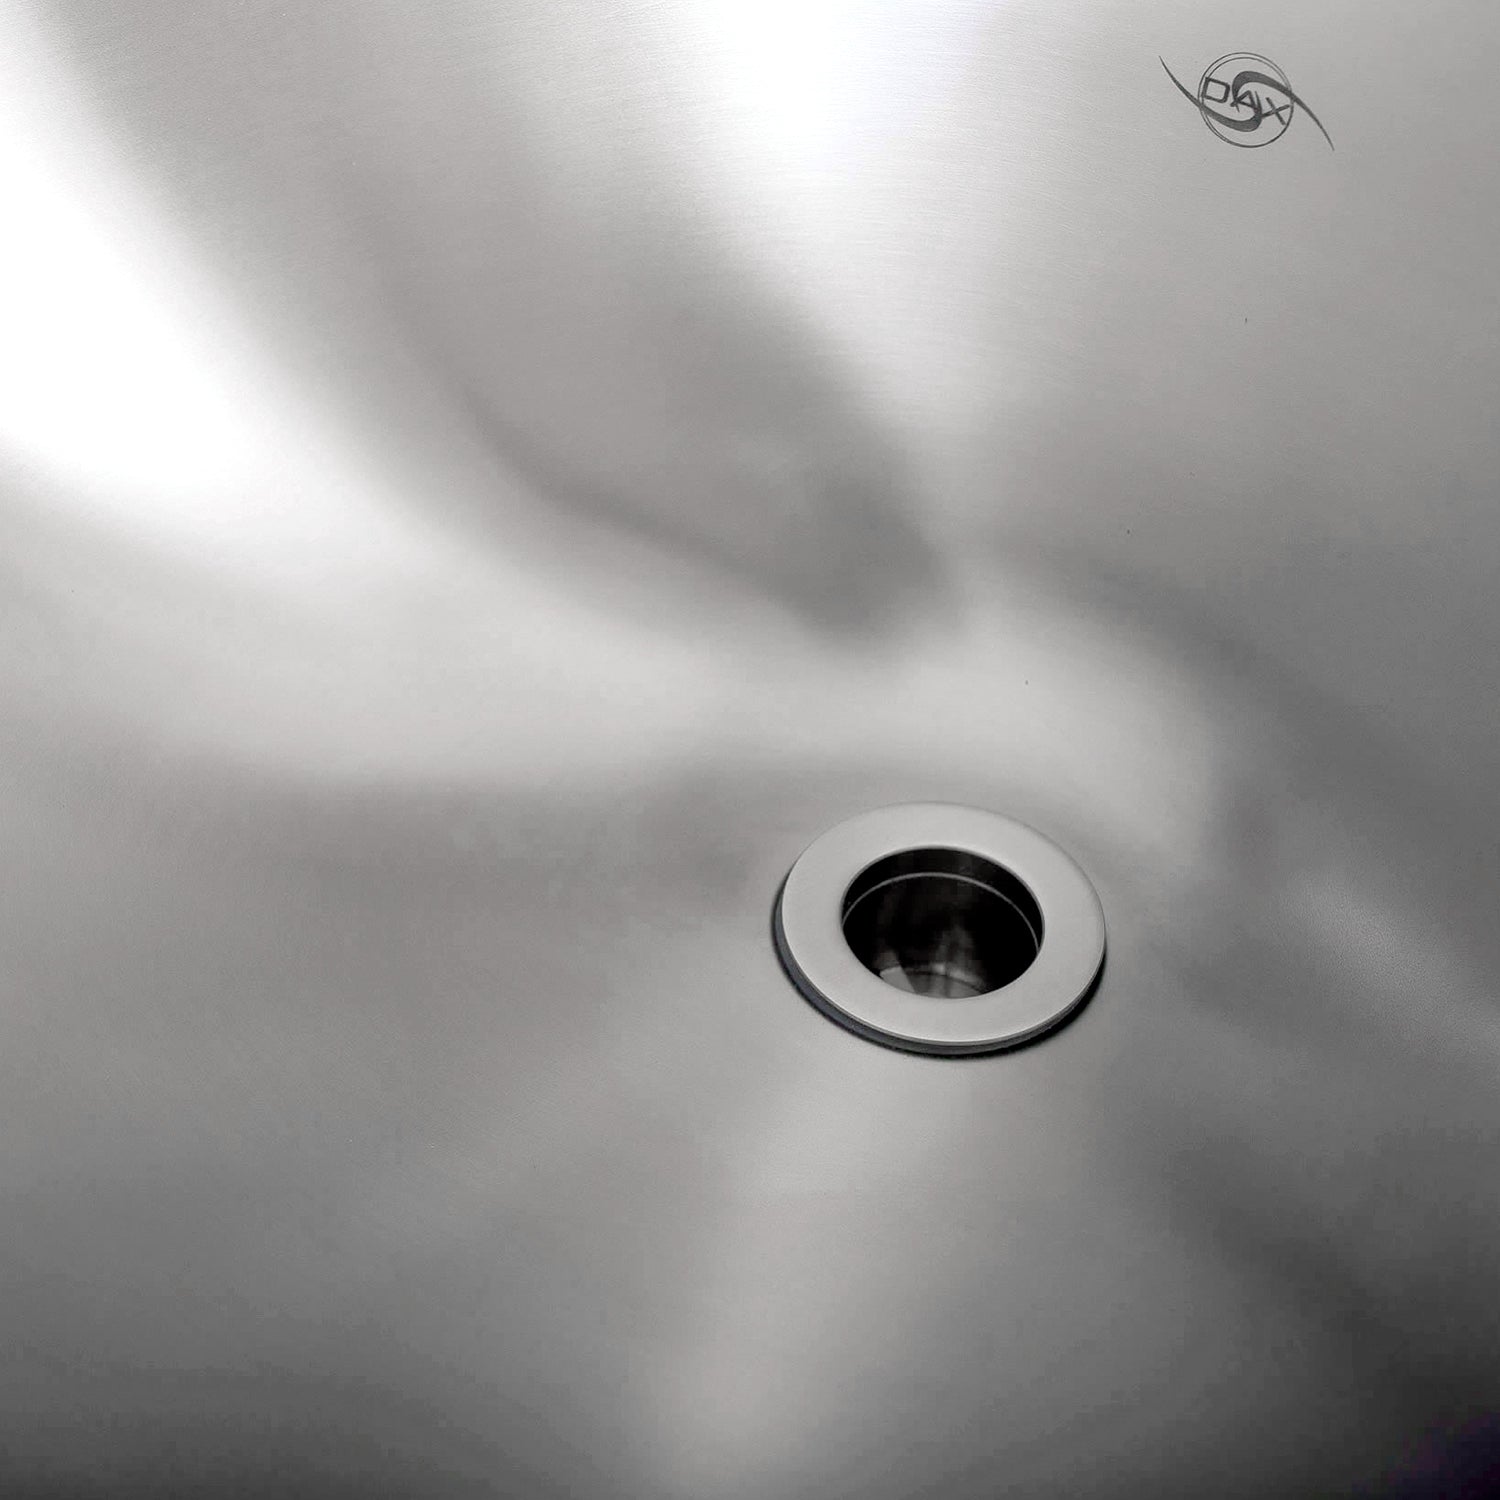 DAX Single Bowl Undermount Kitchen Sink, 18 Gauge Stainless Steel, Brushed Finish , 19-1/8 x 16-1/8 x 7 Inches (DAX-1916)